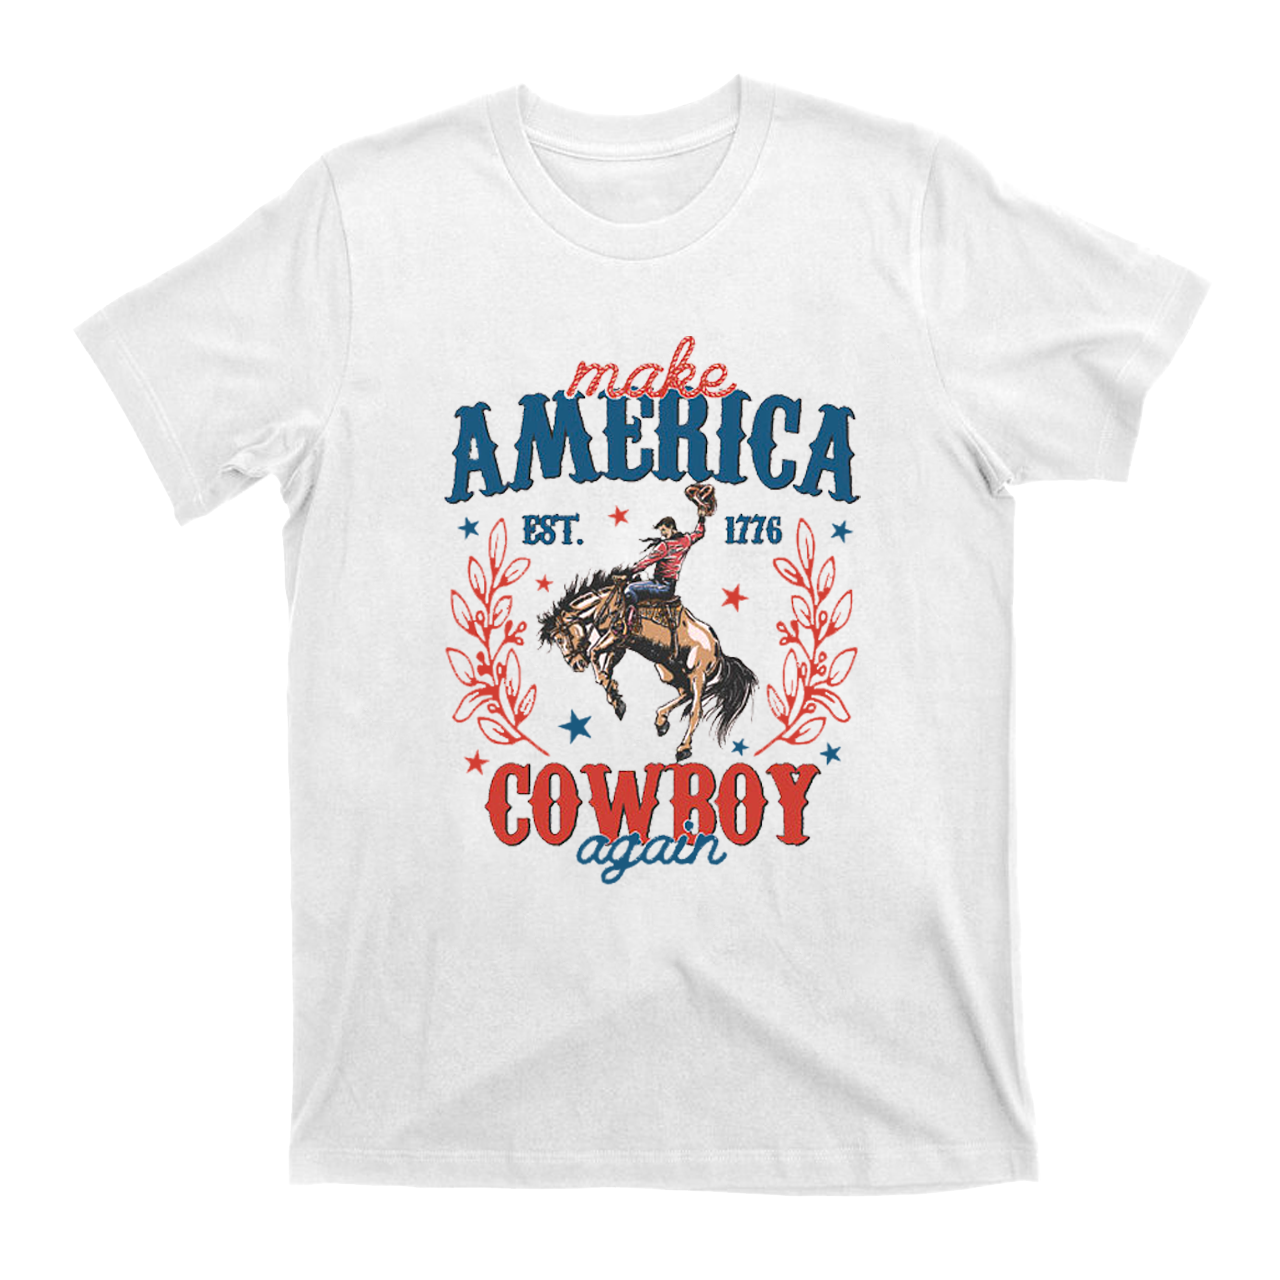 Made Ameria EST. 1776 Cowboy Again T-Shirts